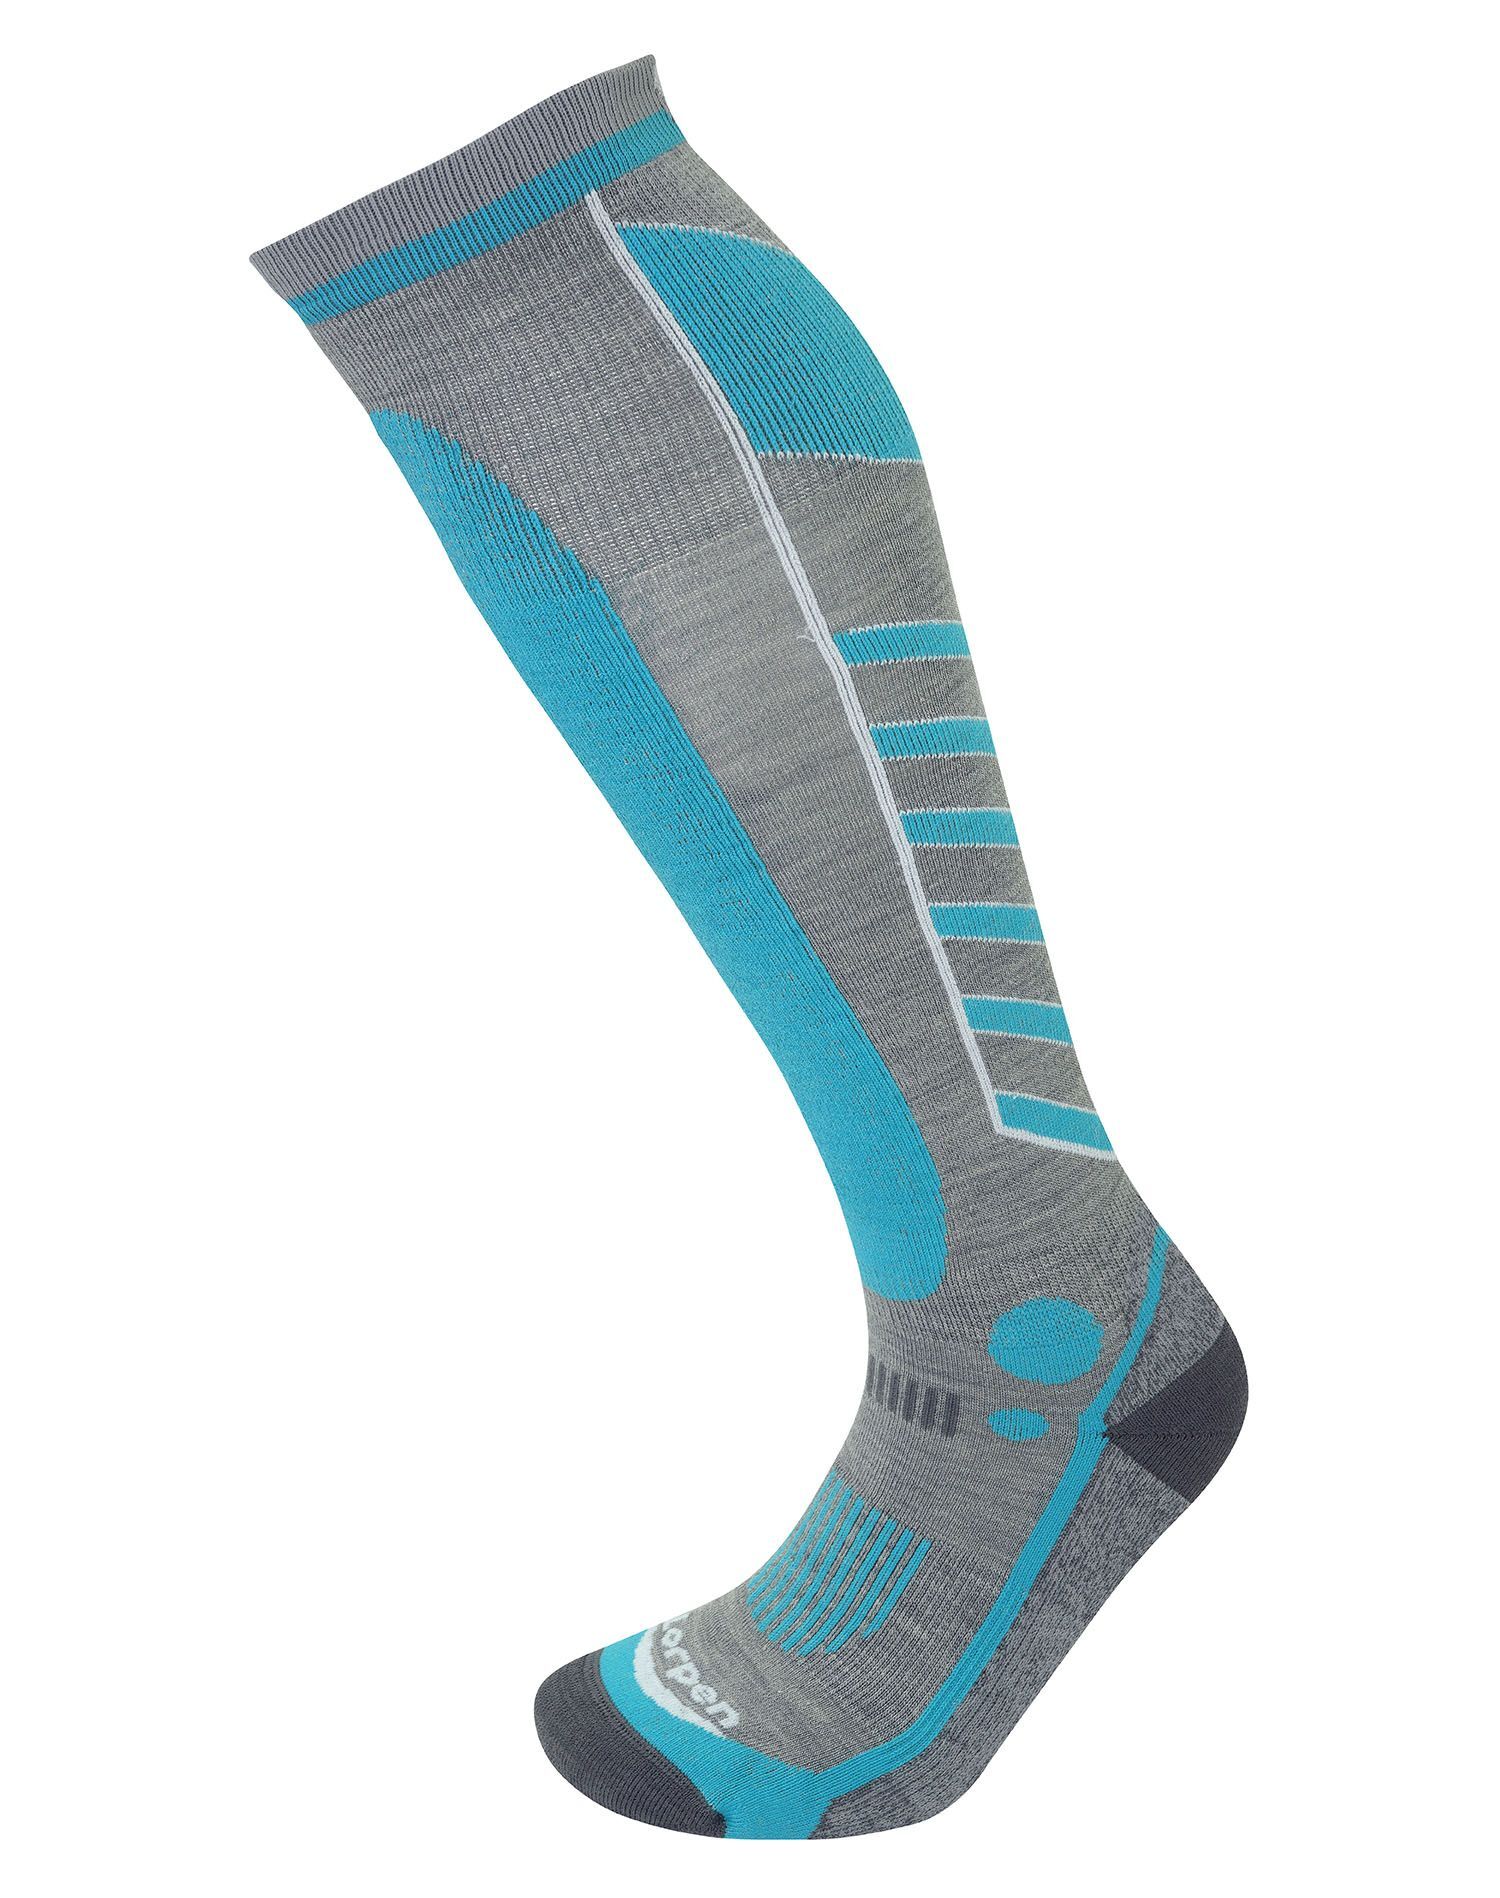 Lorpen - T3 Ski Light - Ski socks - Women's